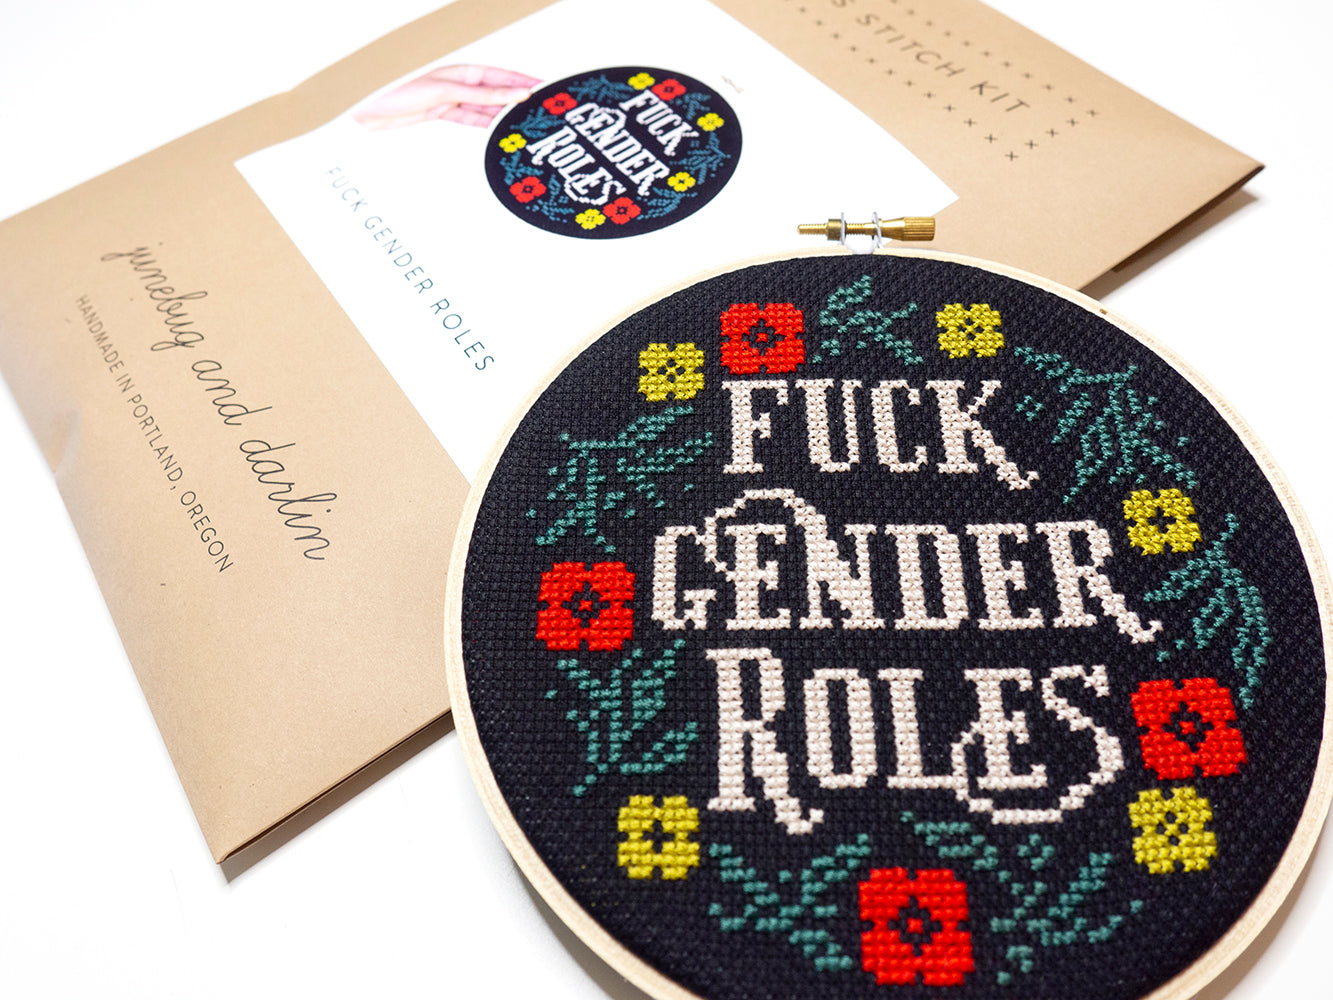 Fuck Gender Roles Kit